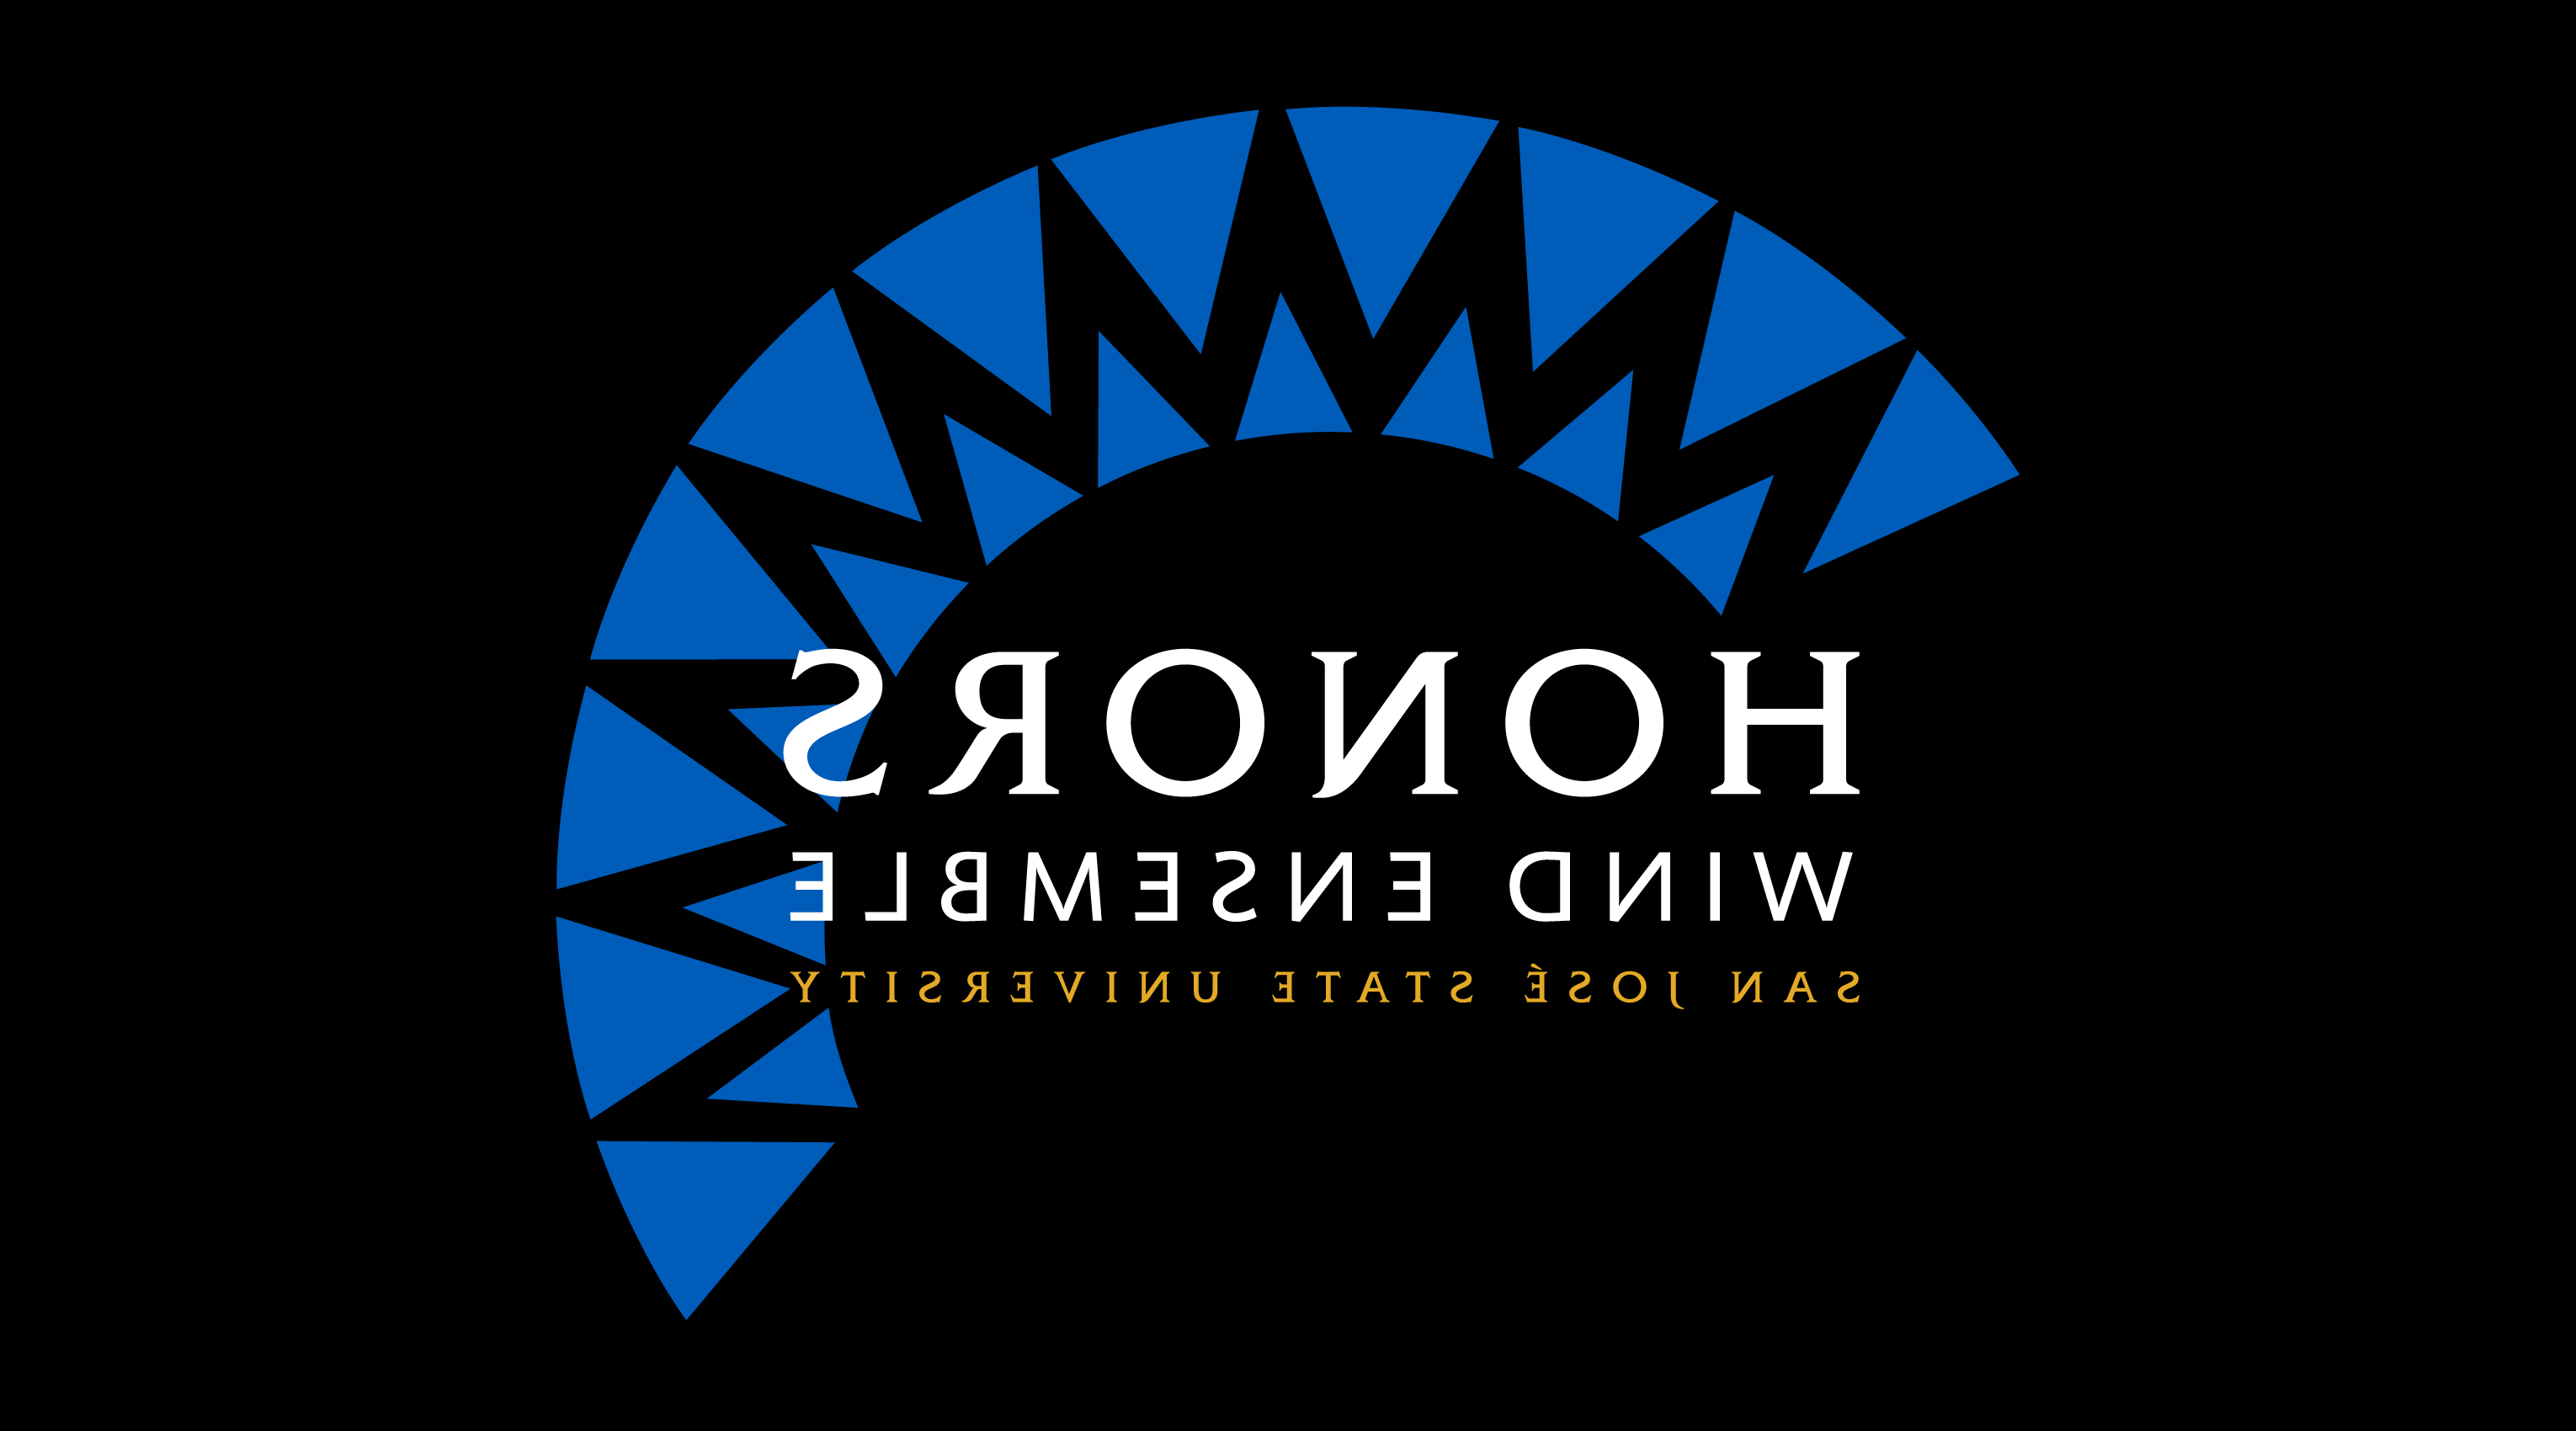 Honors Wind Ensemble Logo